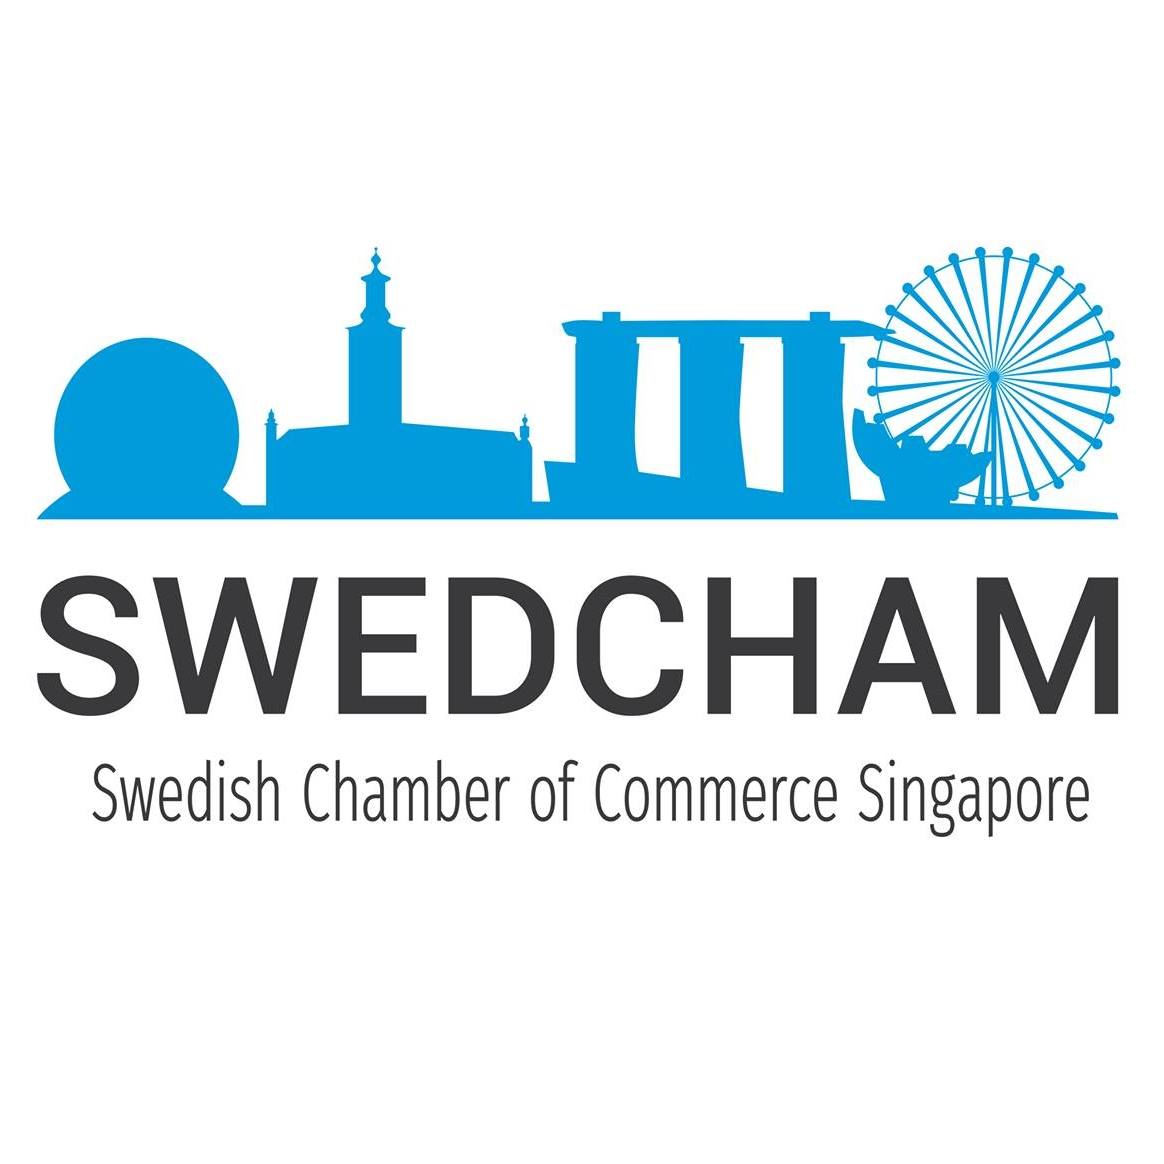 Swedish Chamber of Commerce Singapore